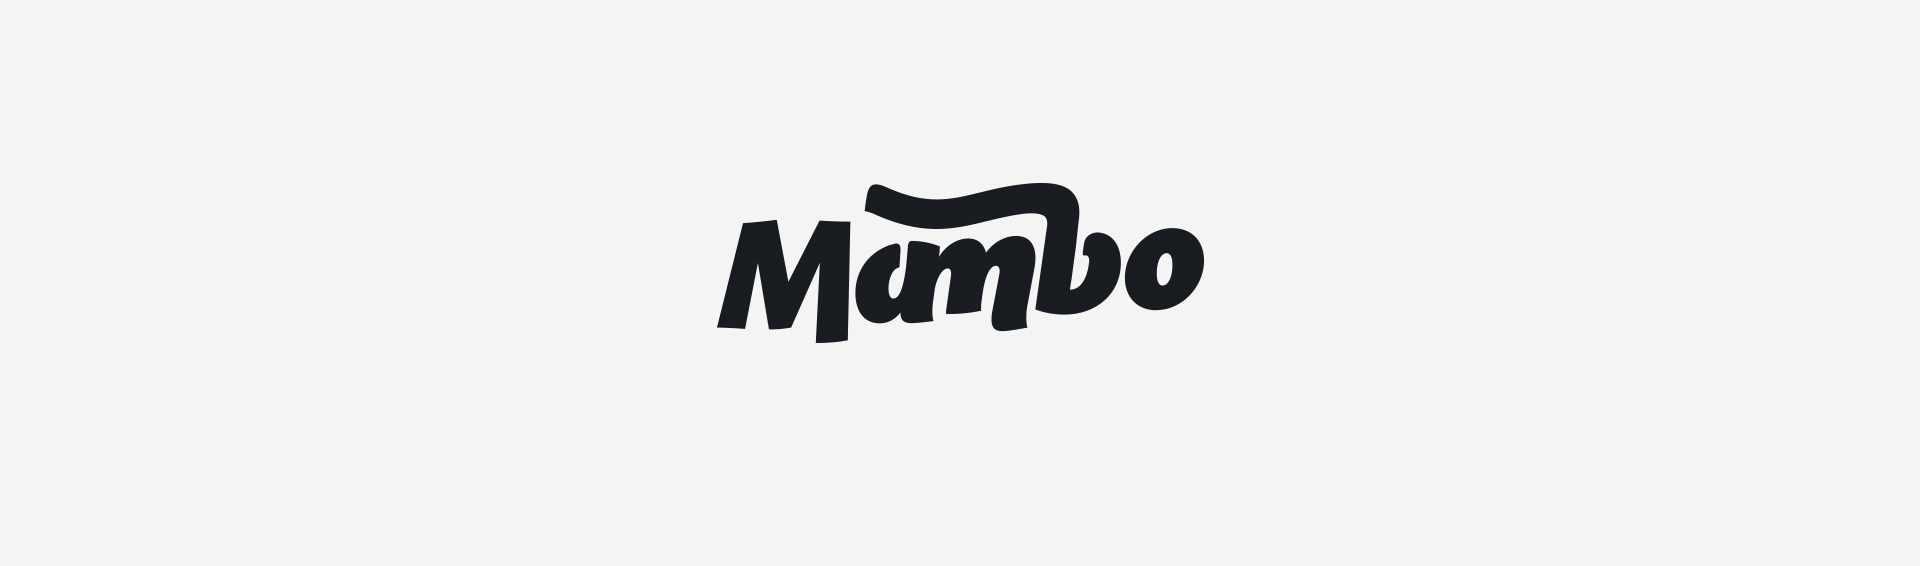 mambo_logotype_identity_corporate